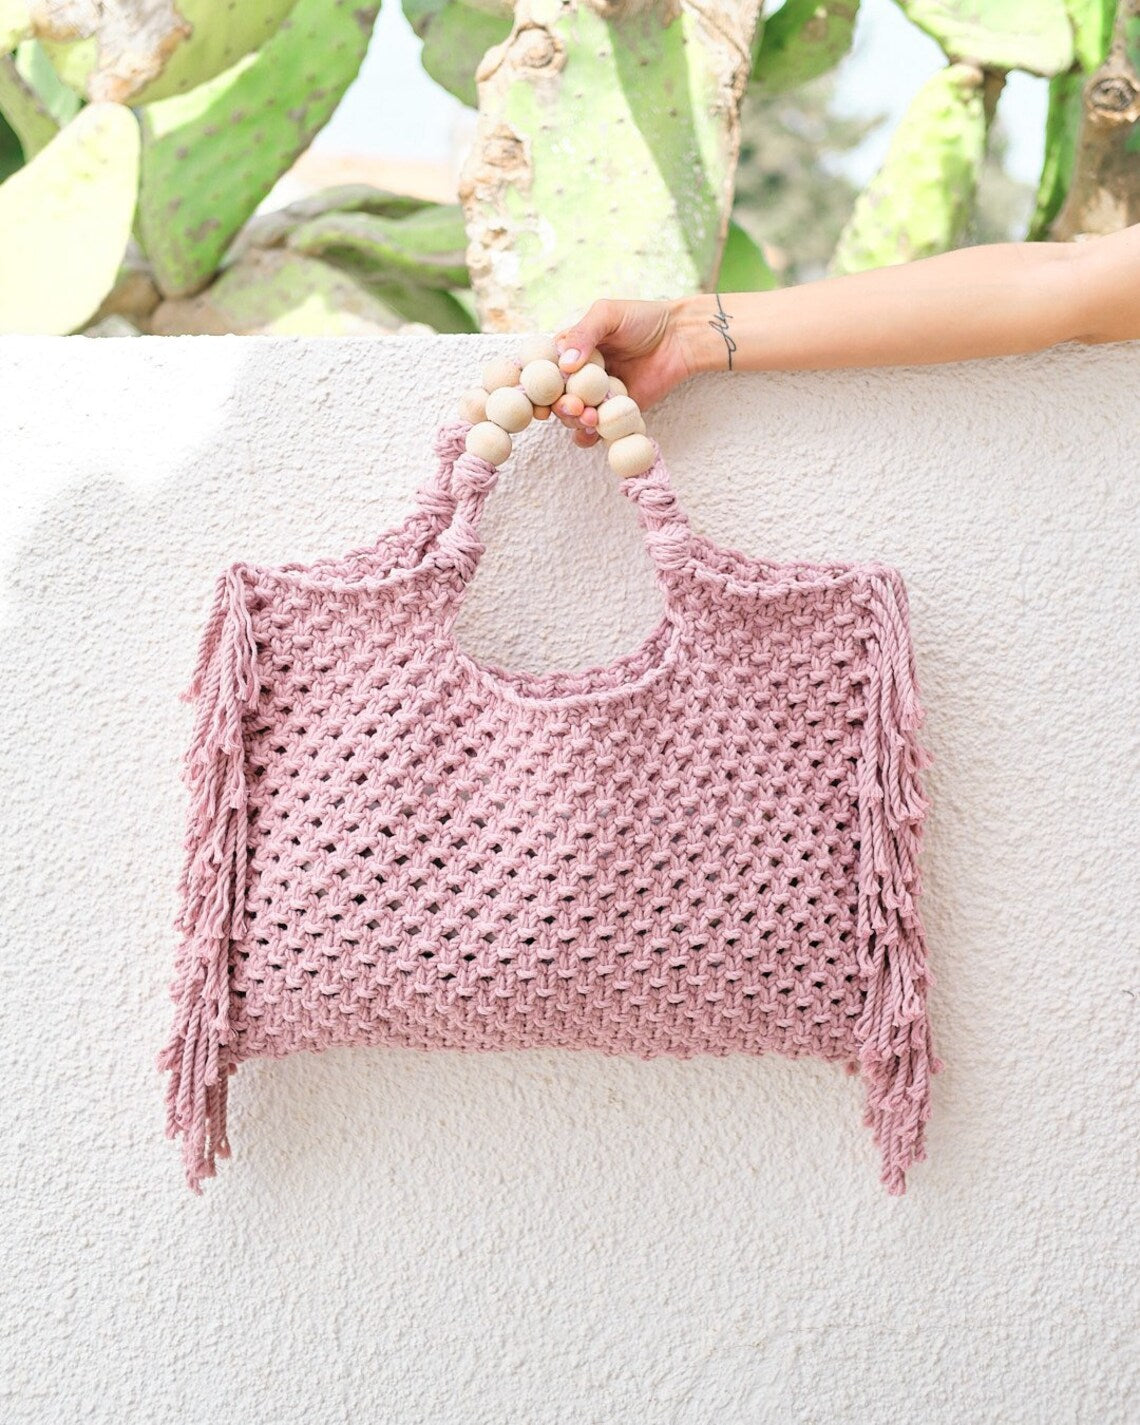 Hollins Crochet Bag … Blonder Mercantile